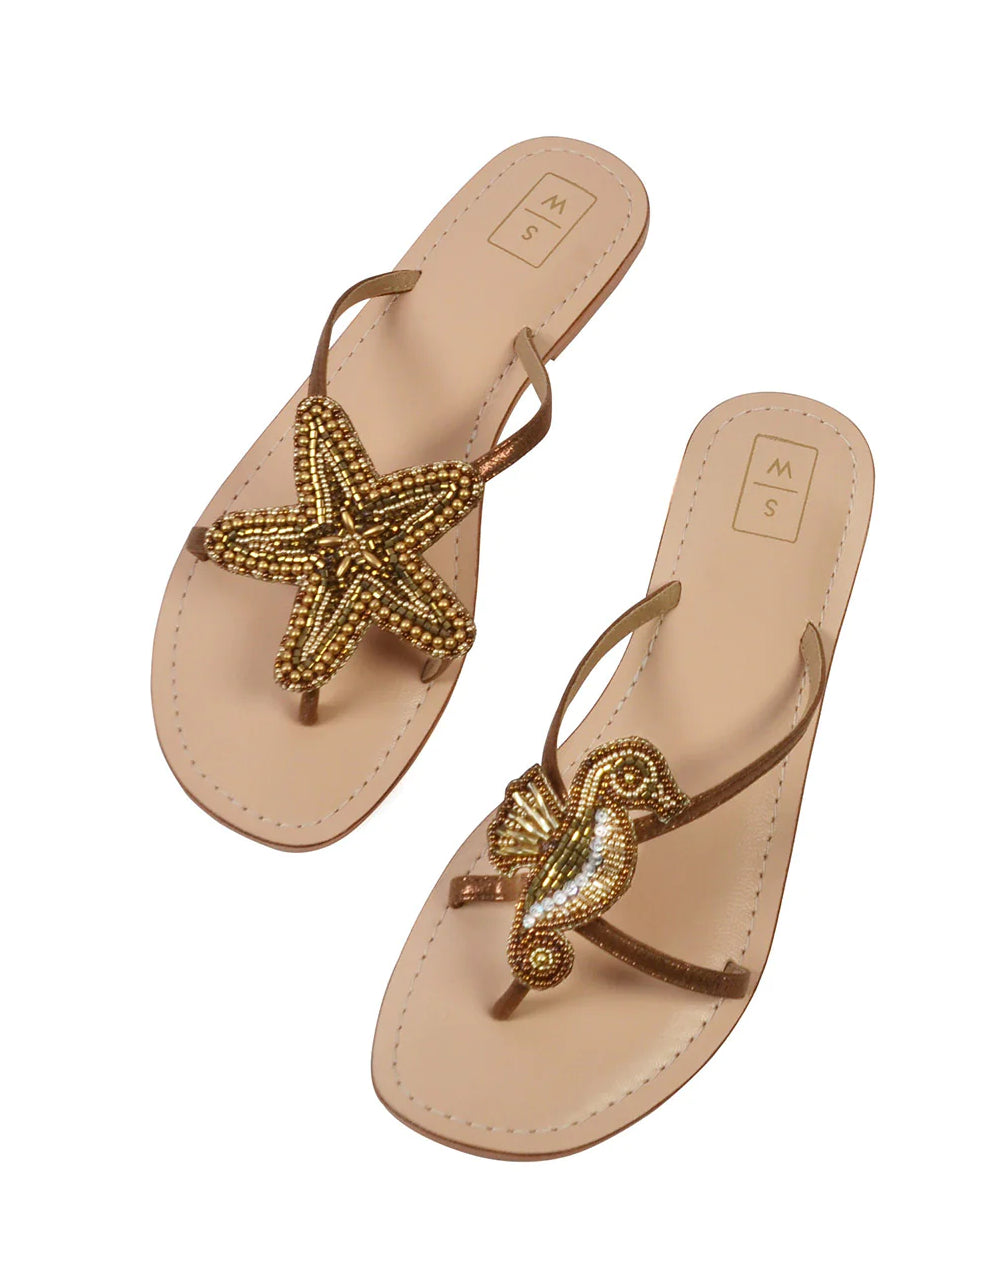 Larry Gold & Bronze Seahorse & Starfish Sandals